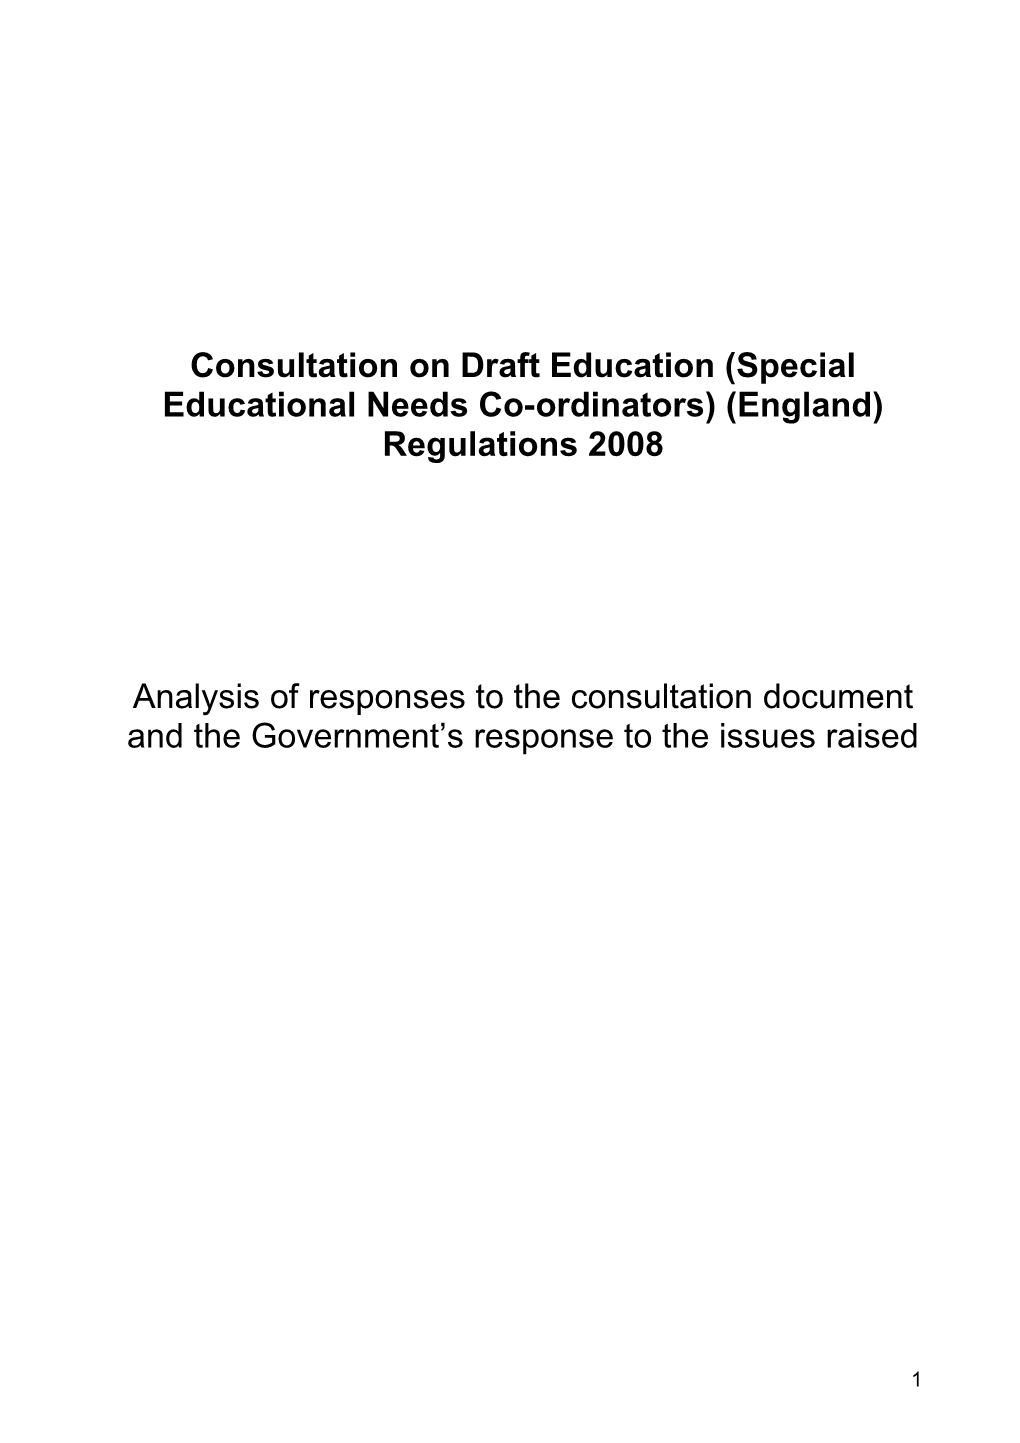 Consultation on Draft Education (Special Educational Needs Co-Ordinators) (England) Regulations